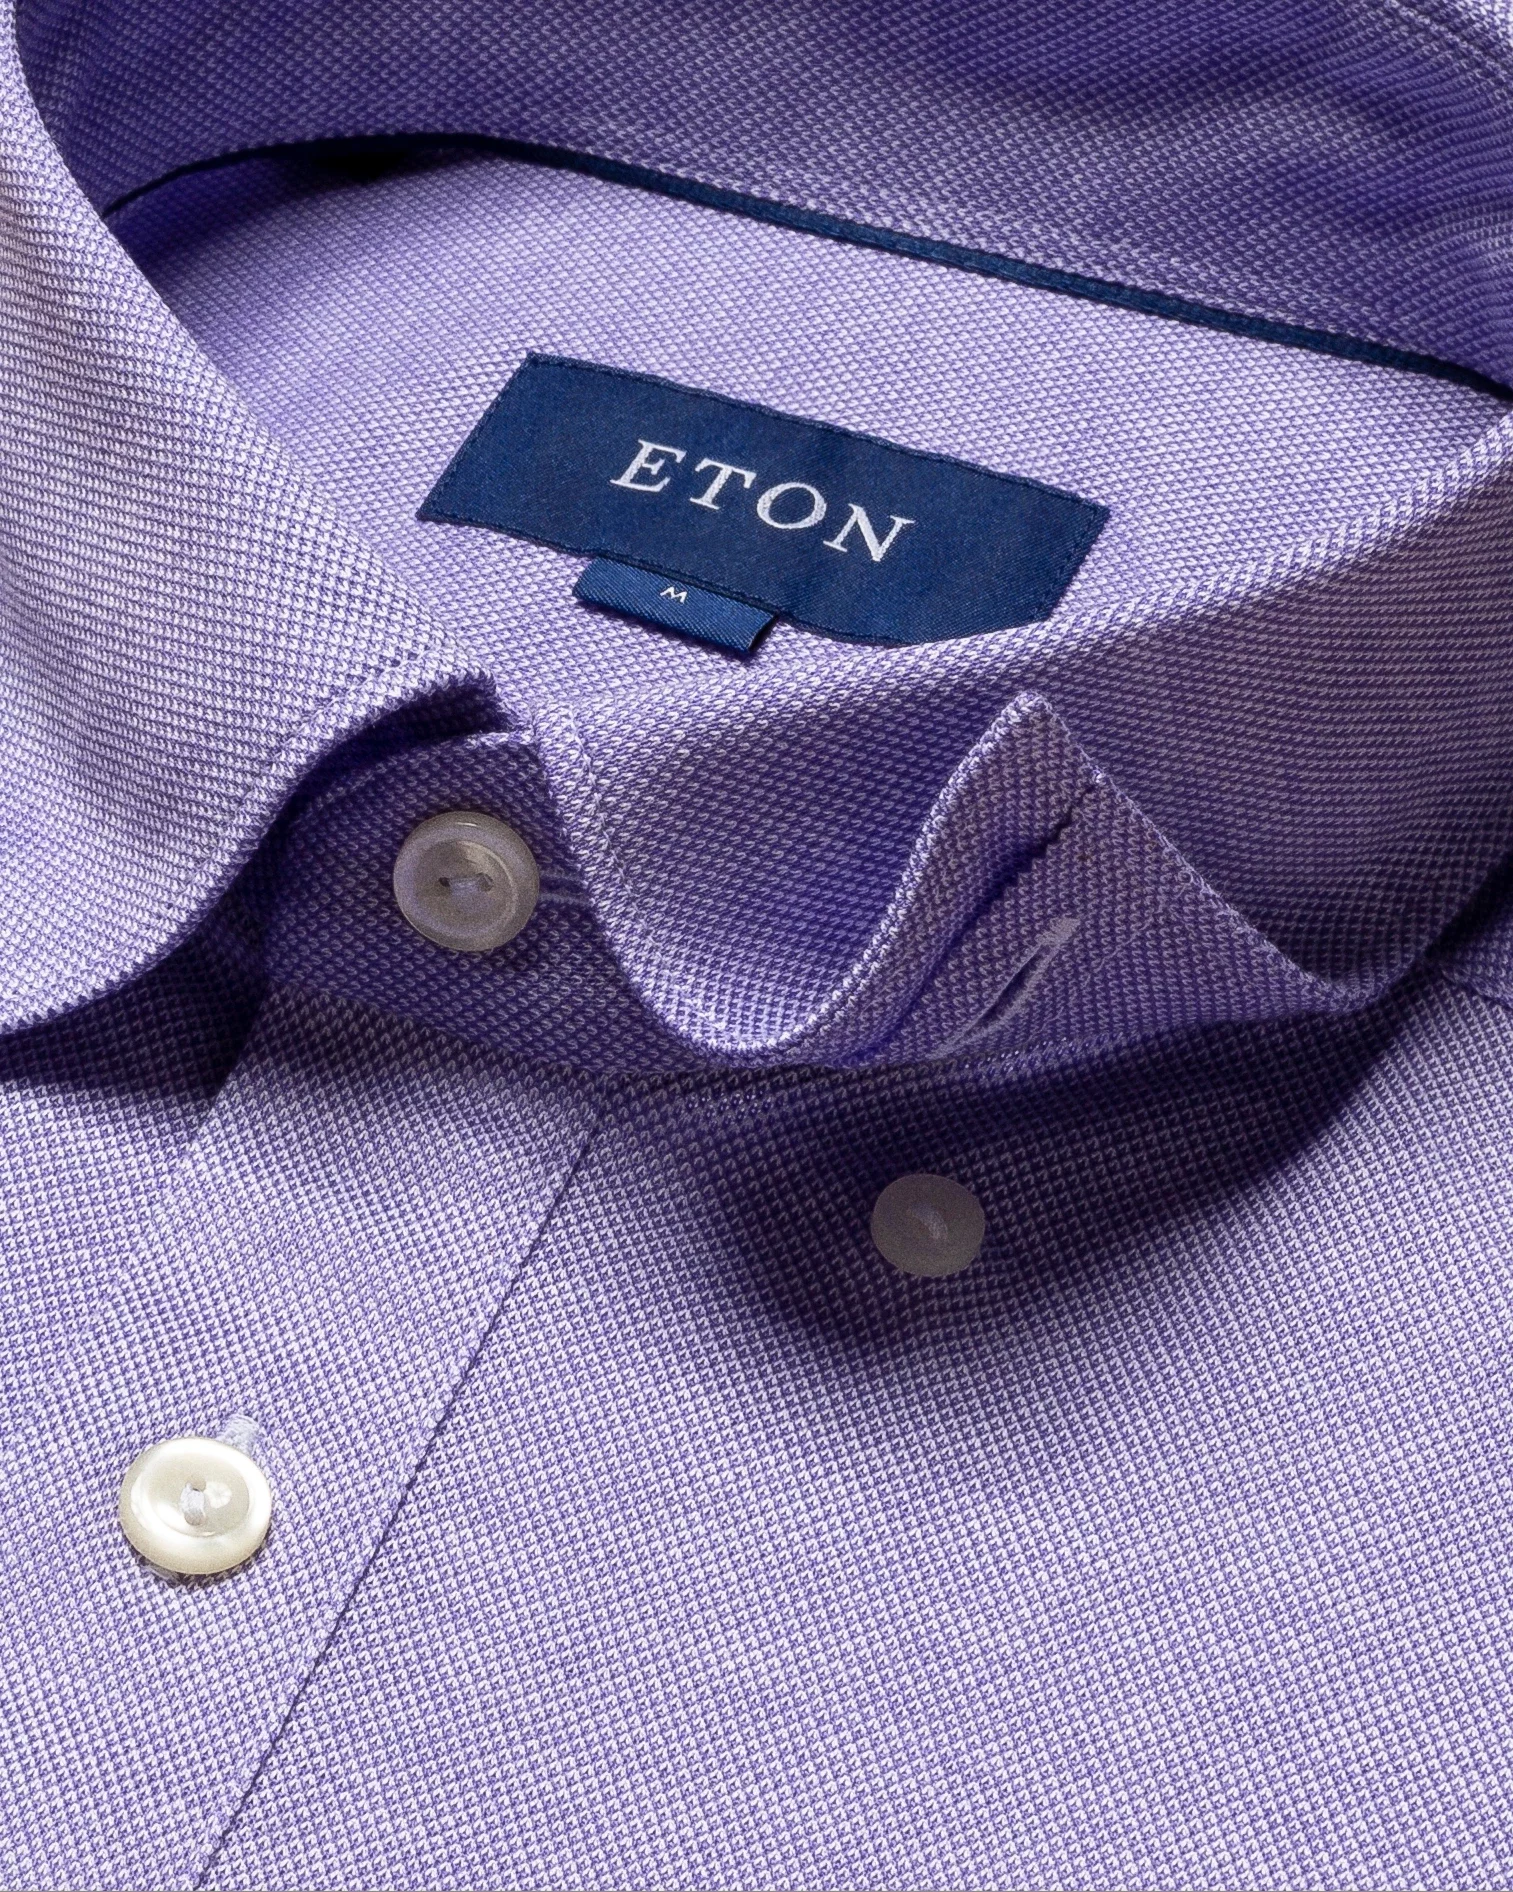 Eton - mid purple jersey buttonunder